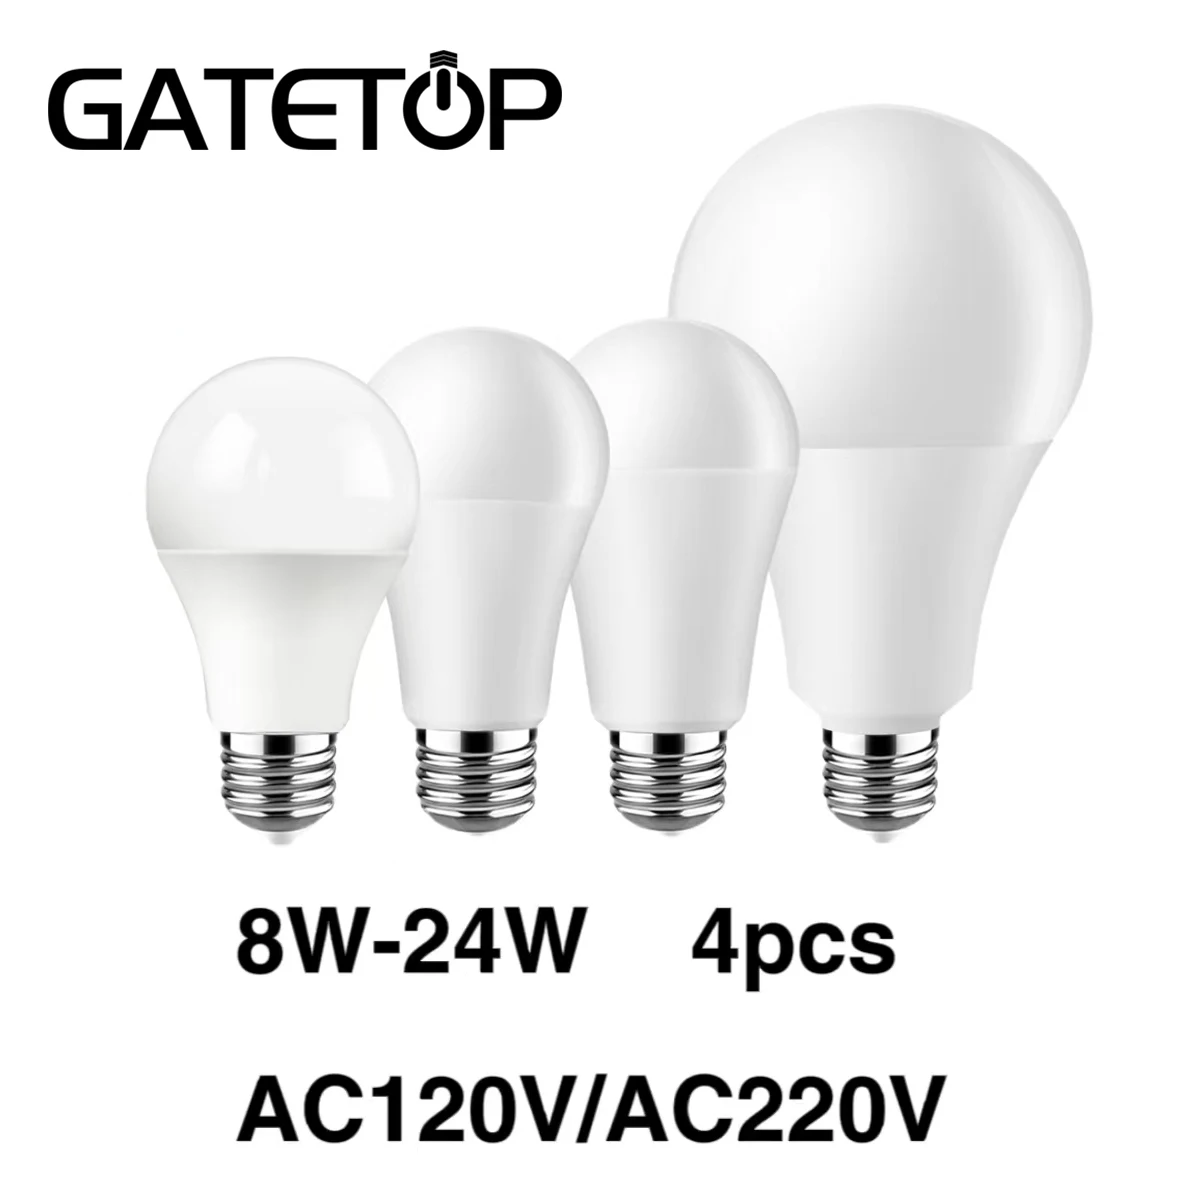 

4pcs Led Bulb Lamps E27 B22 AC120V/AC220V Power 8W 9W 10W 12W 15W 18W 20W 24W Warm White Day White Cold White Lamps for Home